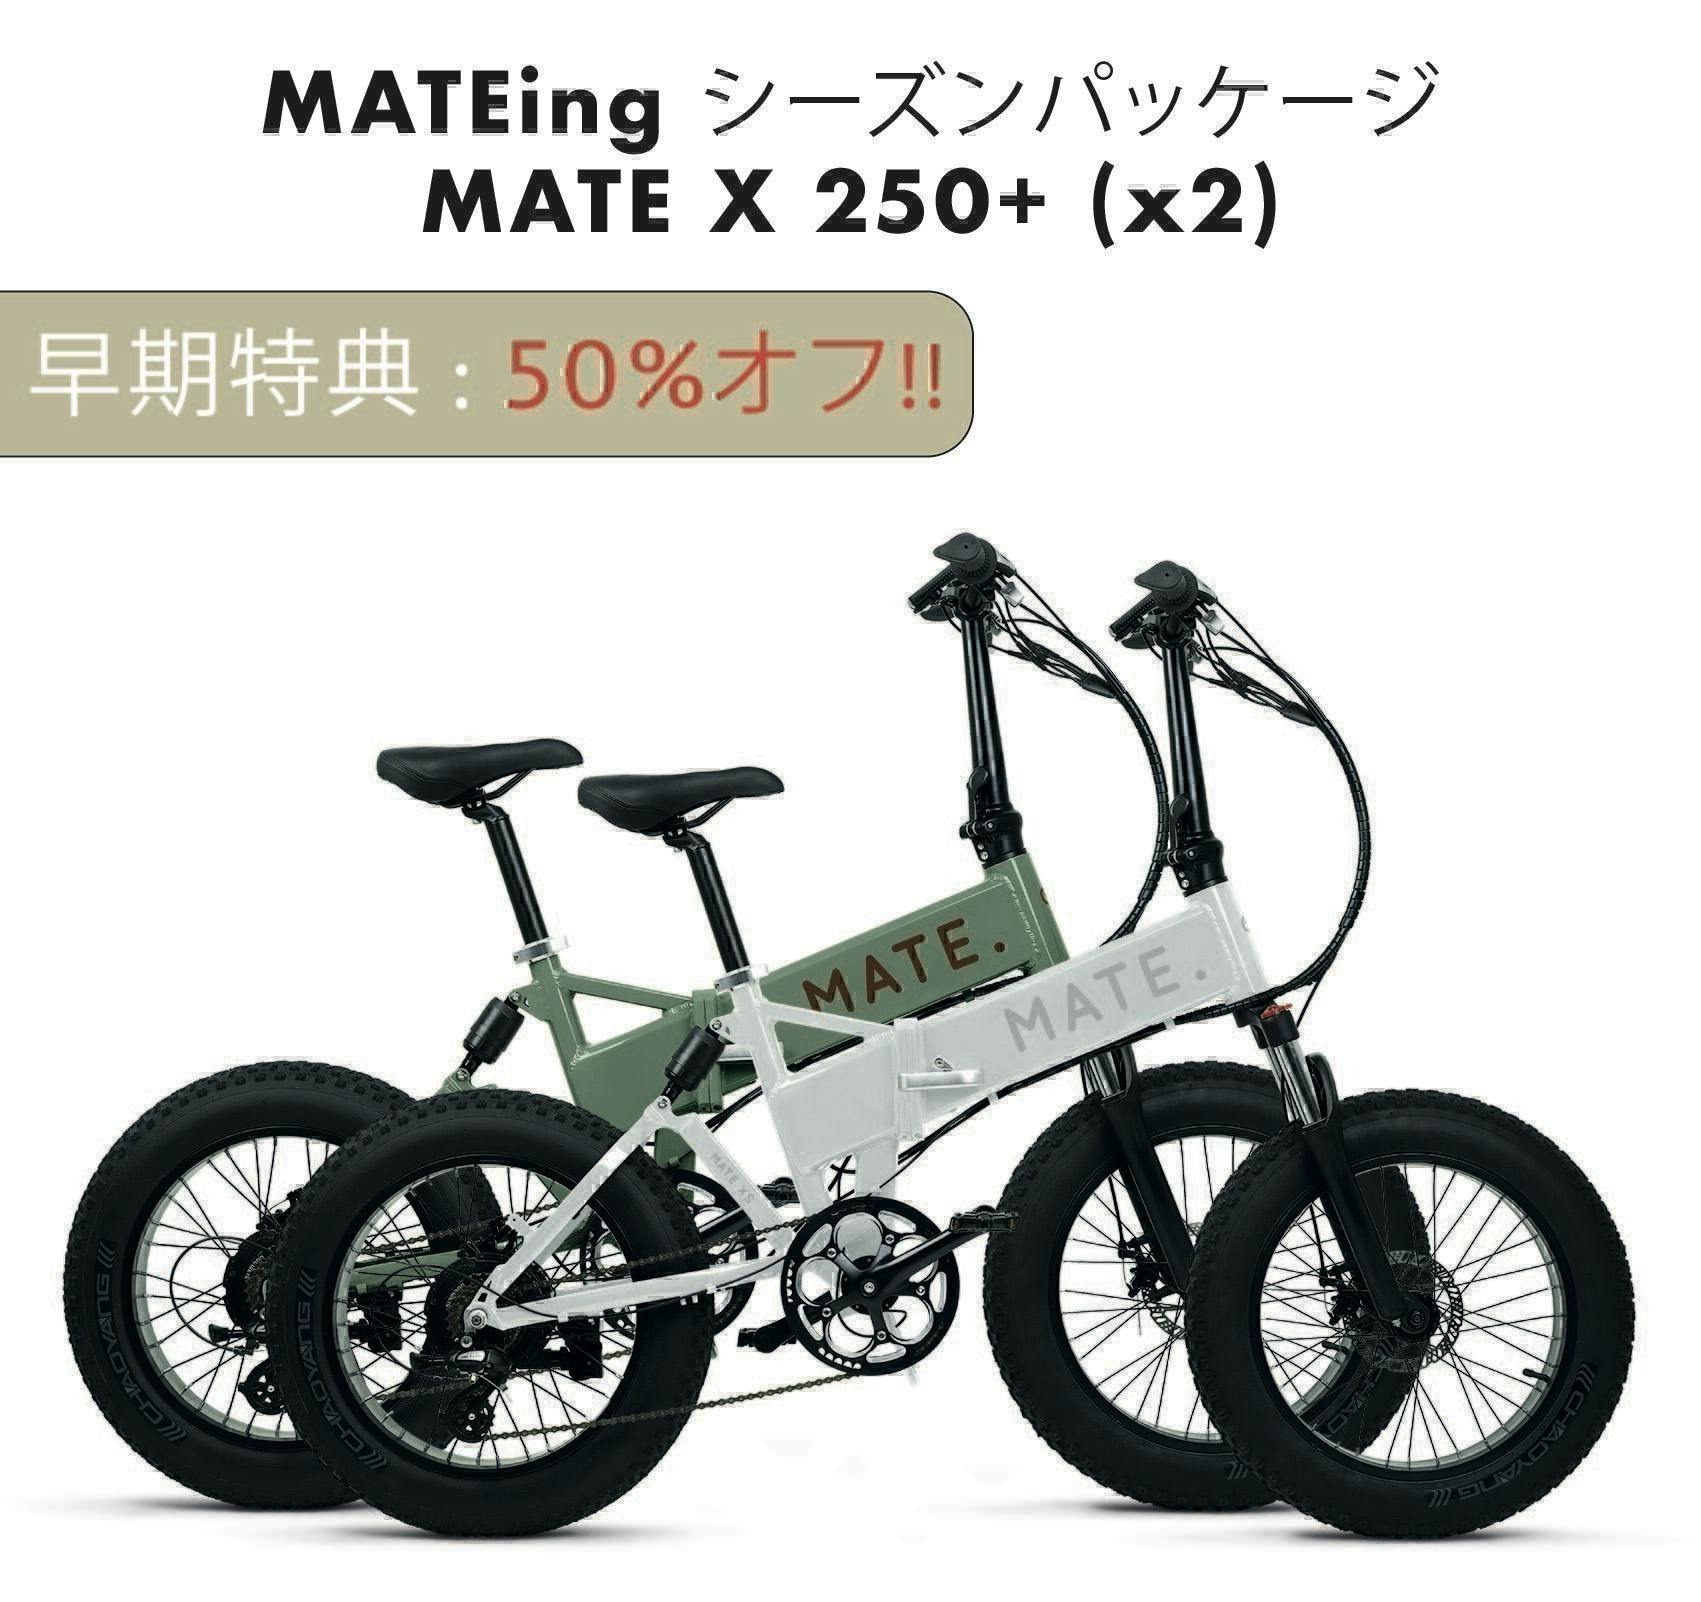 MATE X 250+スロットル バイク